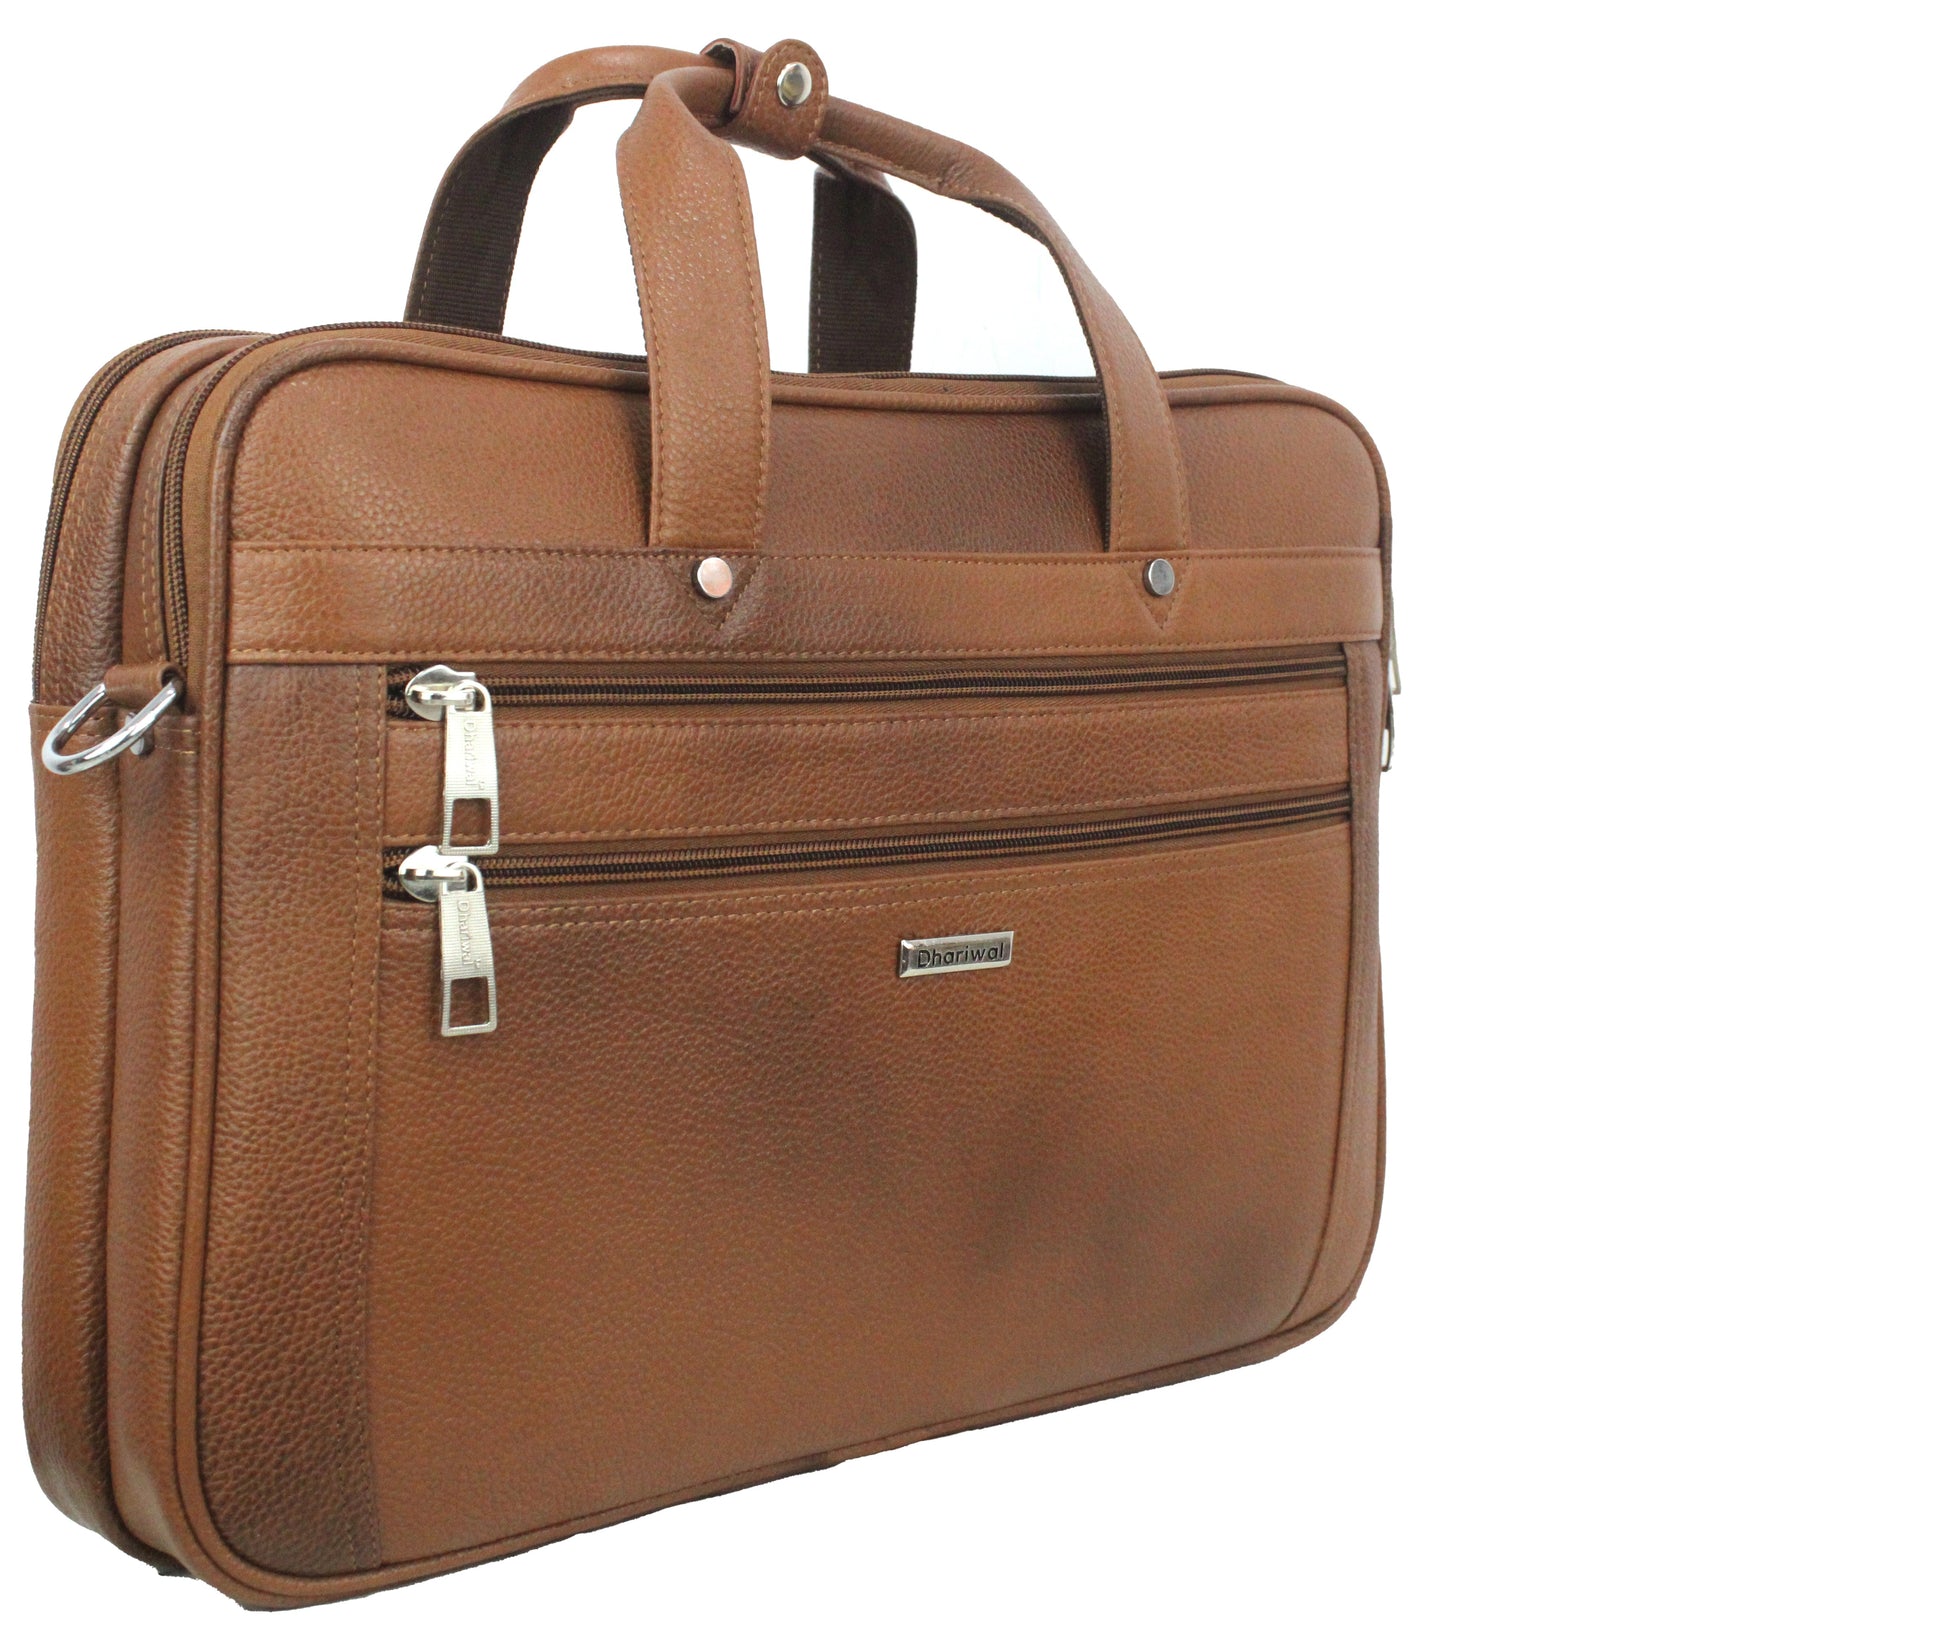 Dhariwal Genuine Leather Laptop Bag File Messenger Bag with Strap upto 15 Inch | Laptop Bag for Men EB-614 Executive Bags Dhariwal Bags Tan 